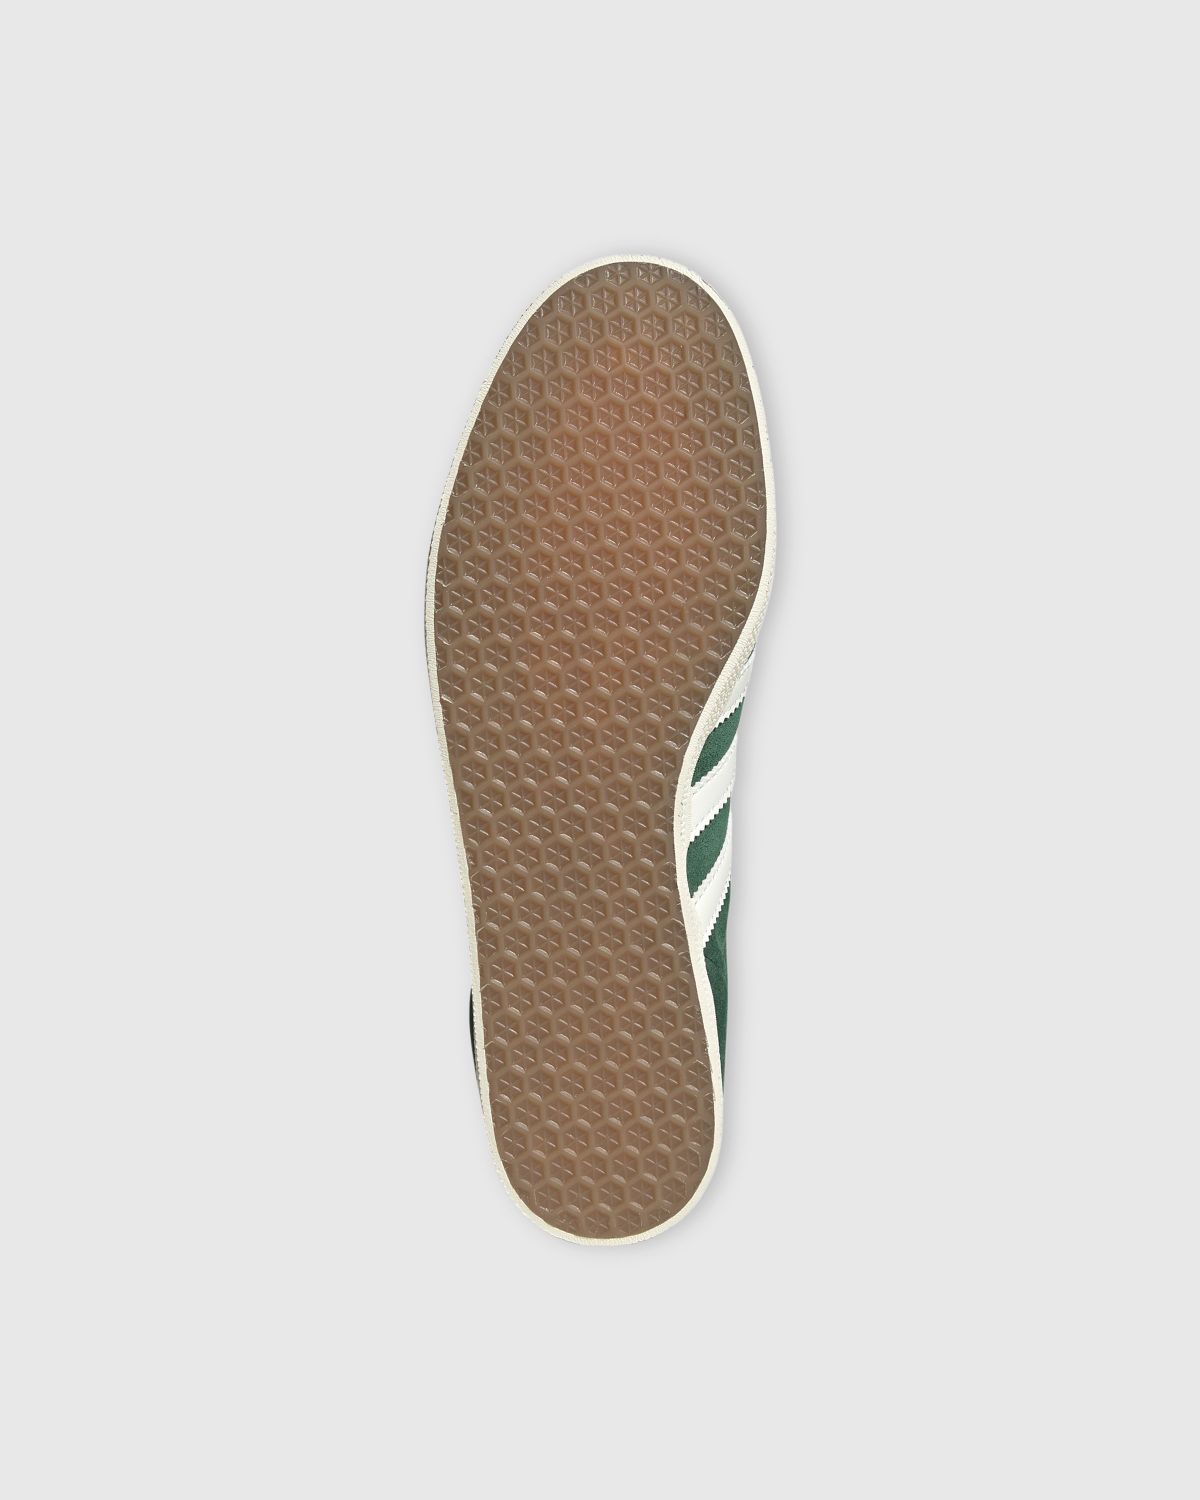 Adidas – Gazelle Green/White | Highsnobiety Shop